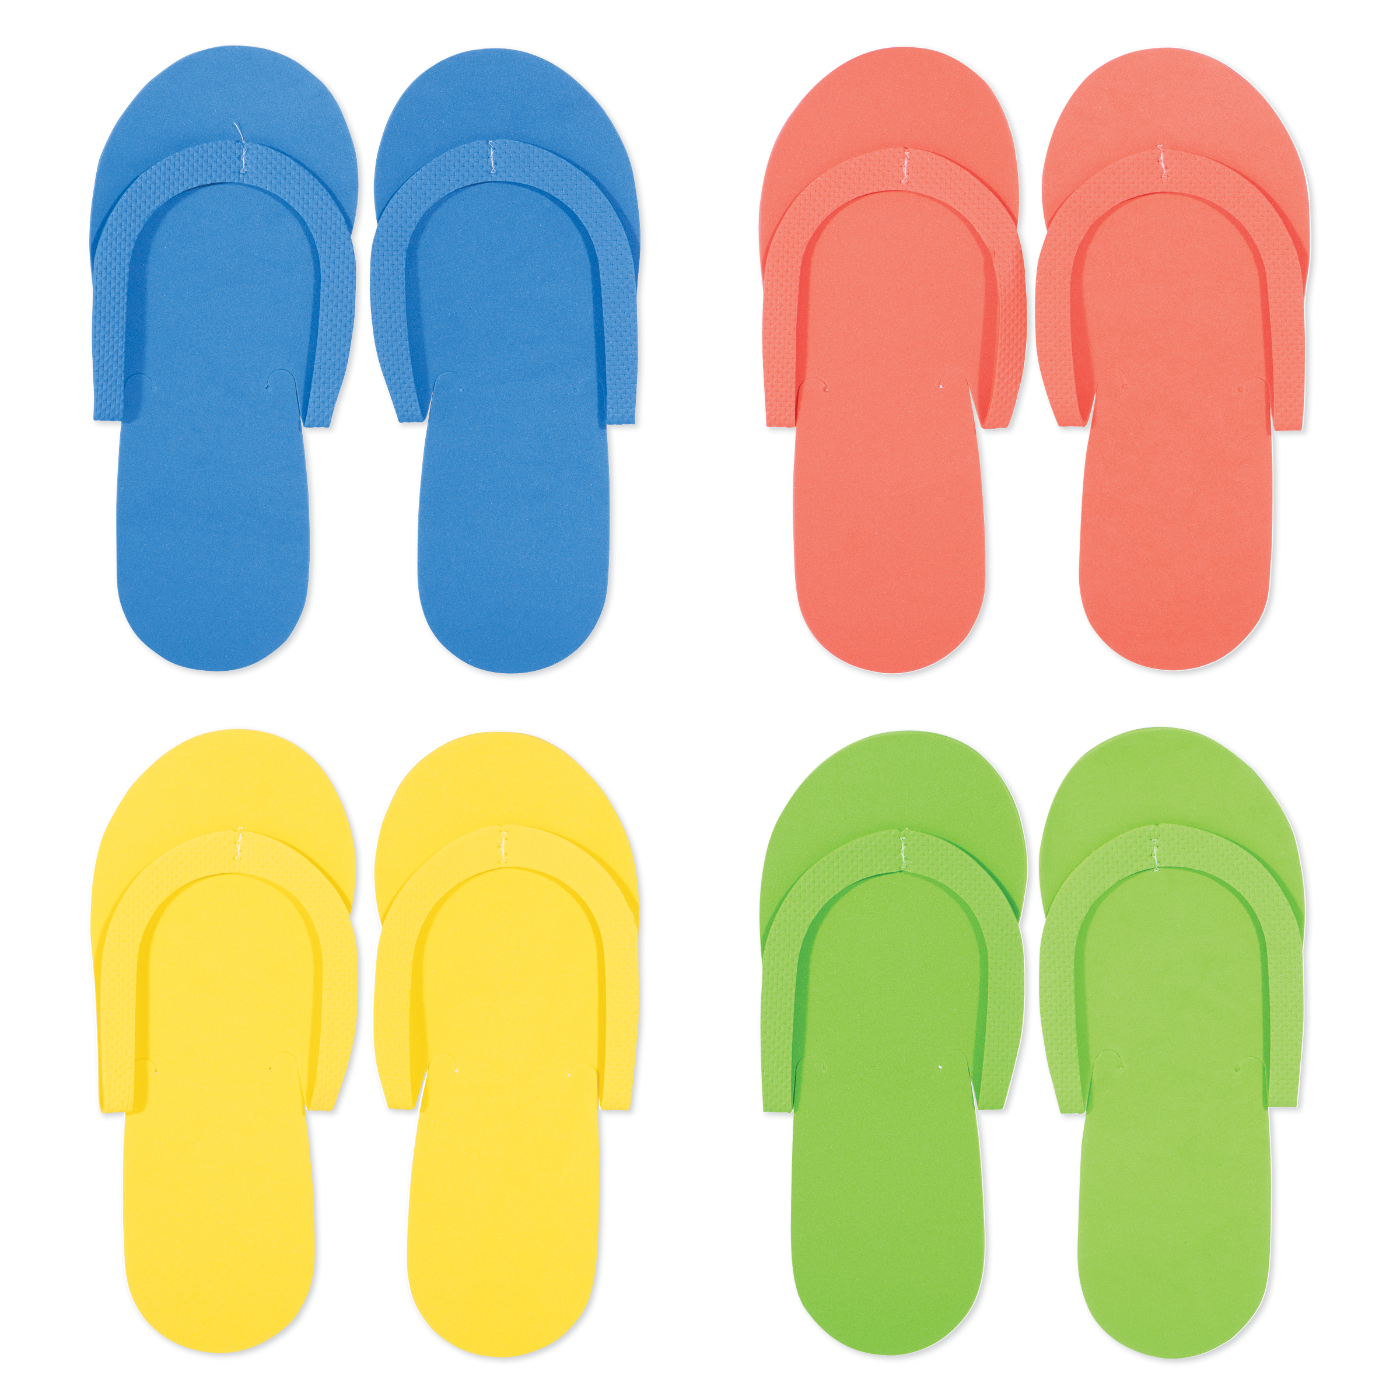 Pedislippers, Non-slip, Assorted Colors - 12 pairs